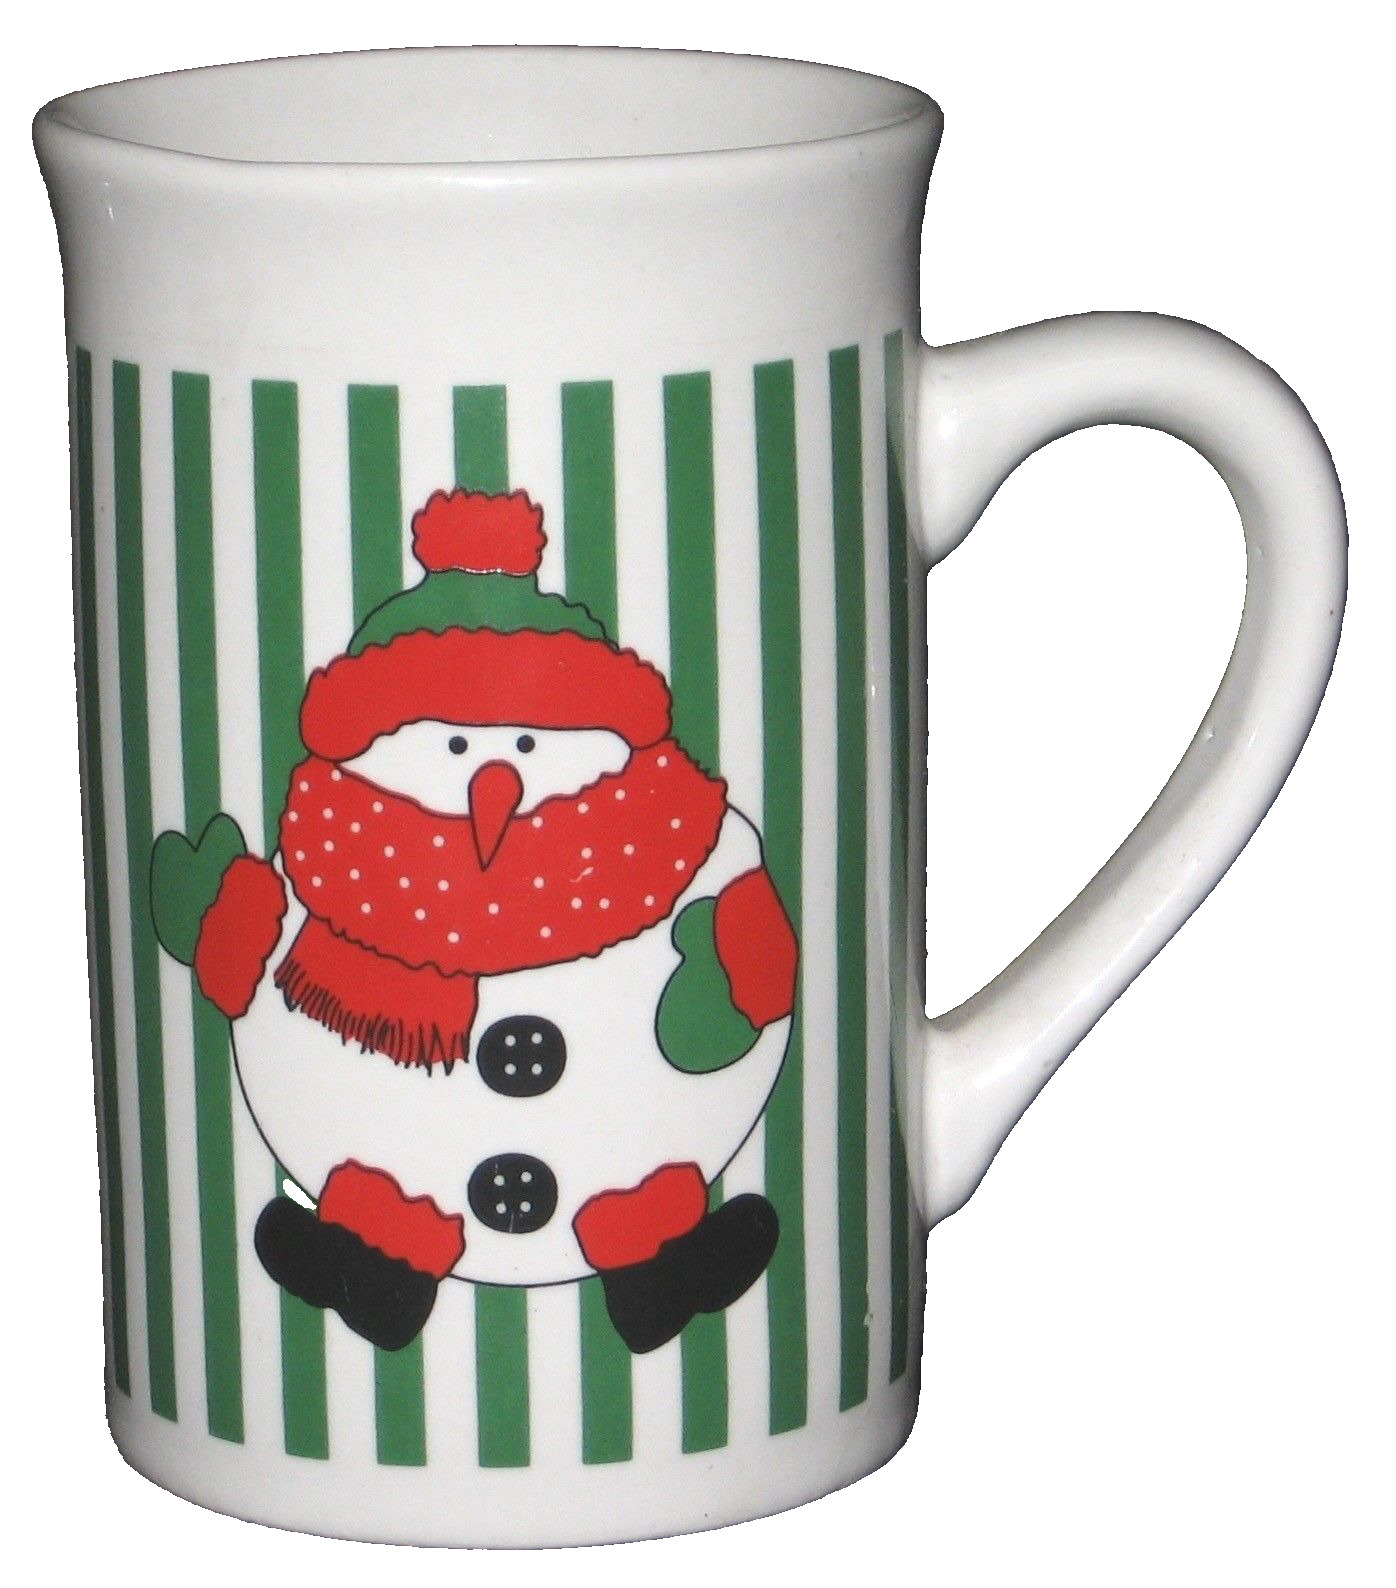 Royal Norfolk Christmas Snowman Mug Bright Colorful.